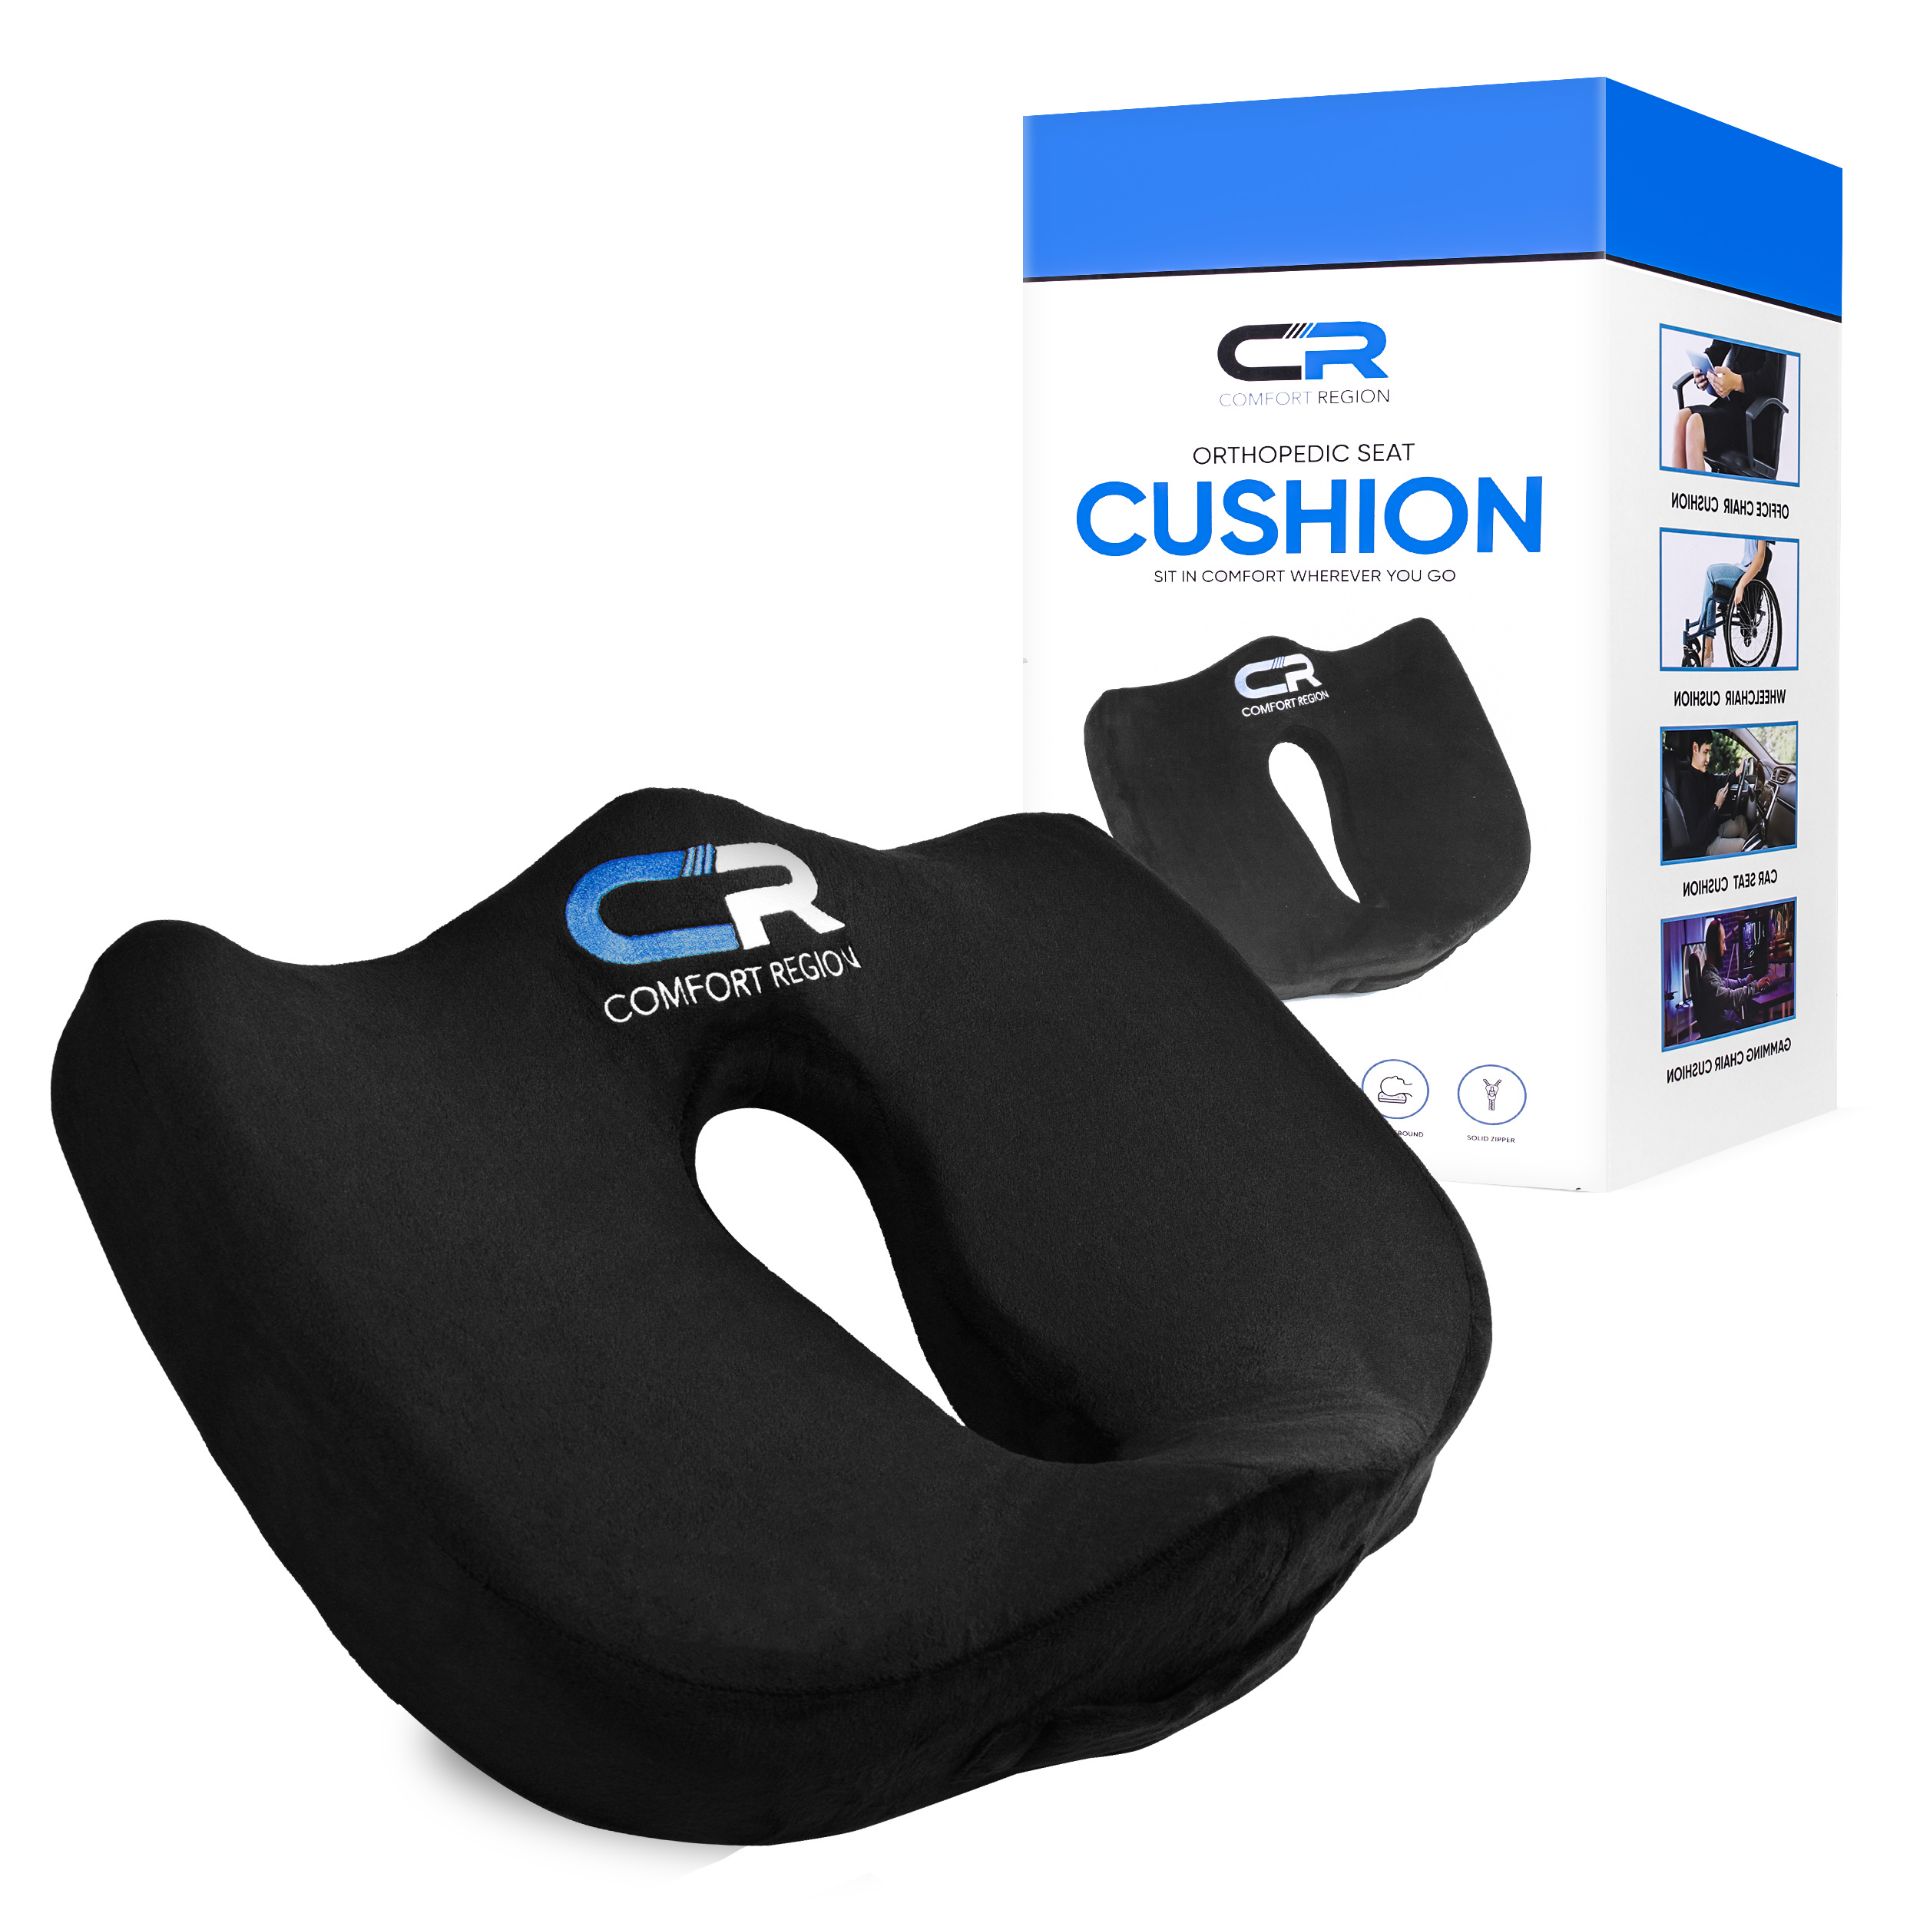 Comfort Region- Coccyx Cushion For Tailbone Pain, Memory Foam Gel Non-Slip Car Seat Cushion, Offi... - Image 3 of 3